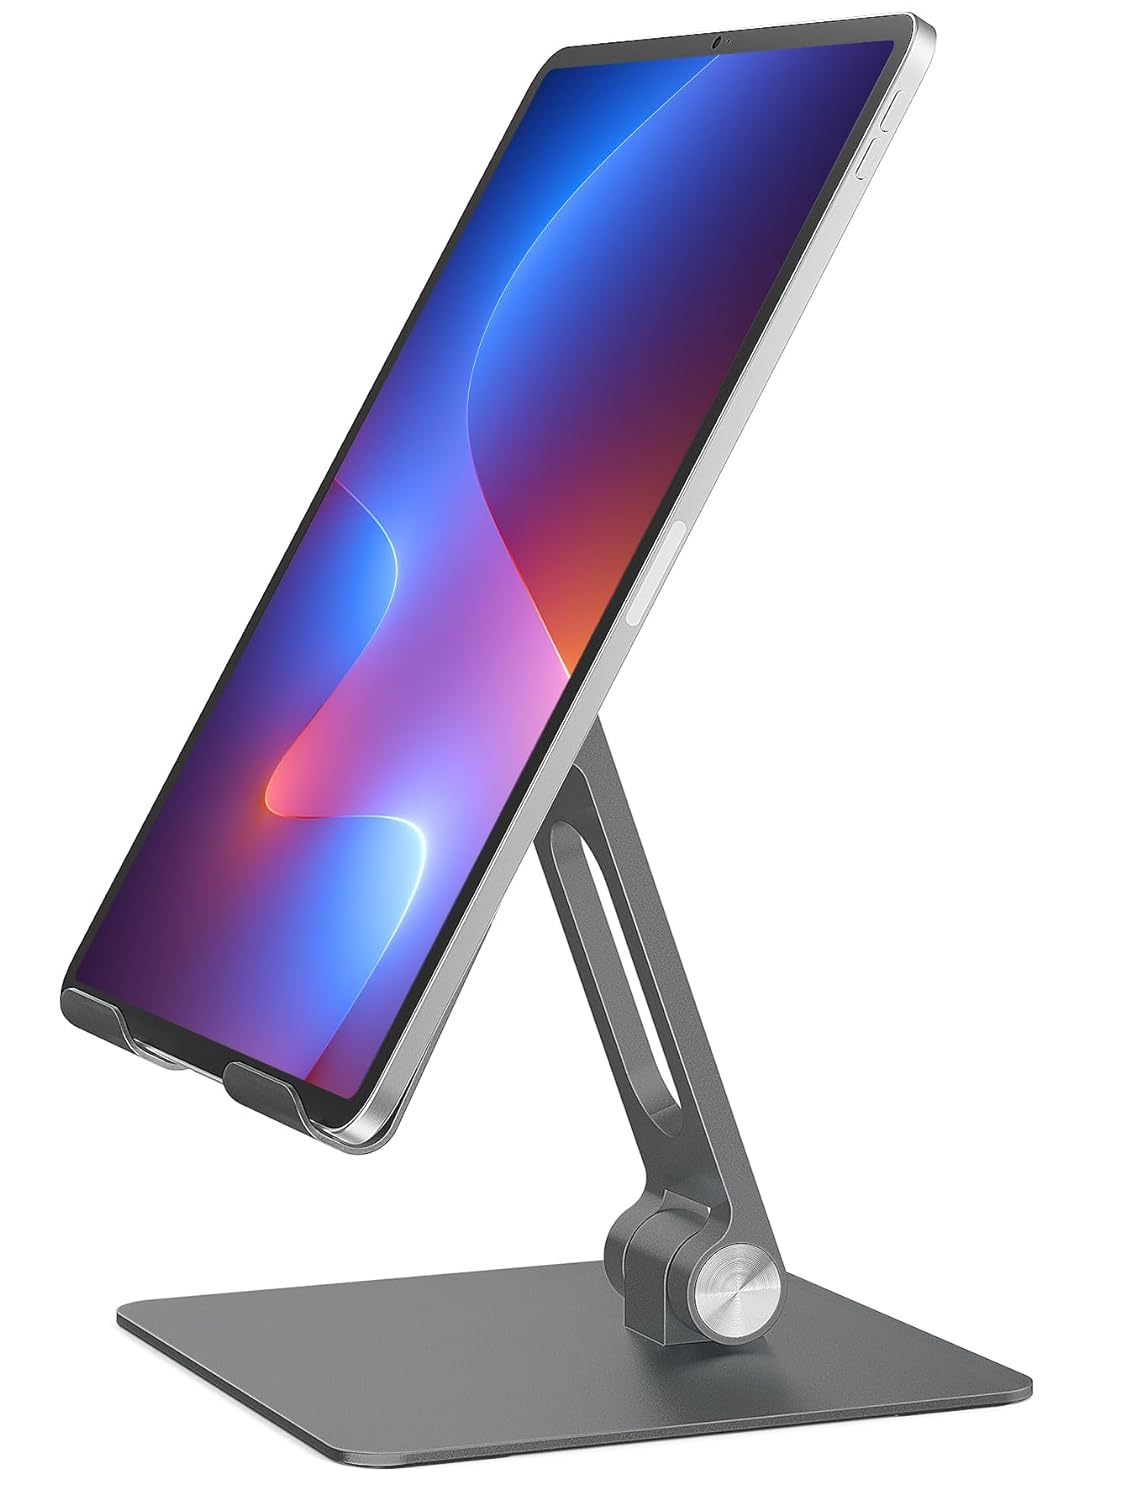 ALASHI Tablet Stand for Desk, Multi-Angle Adjustable, Foldable Portable Tablet Holder, Ergonomic Design Tablet Riser Compatible with 4 to 13 Inches Tablets, Black